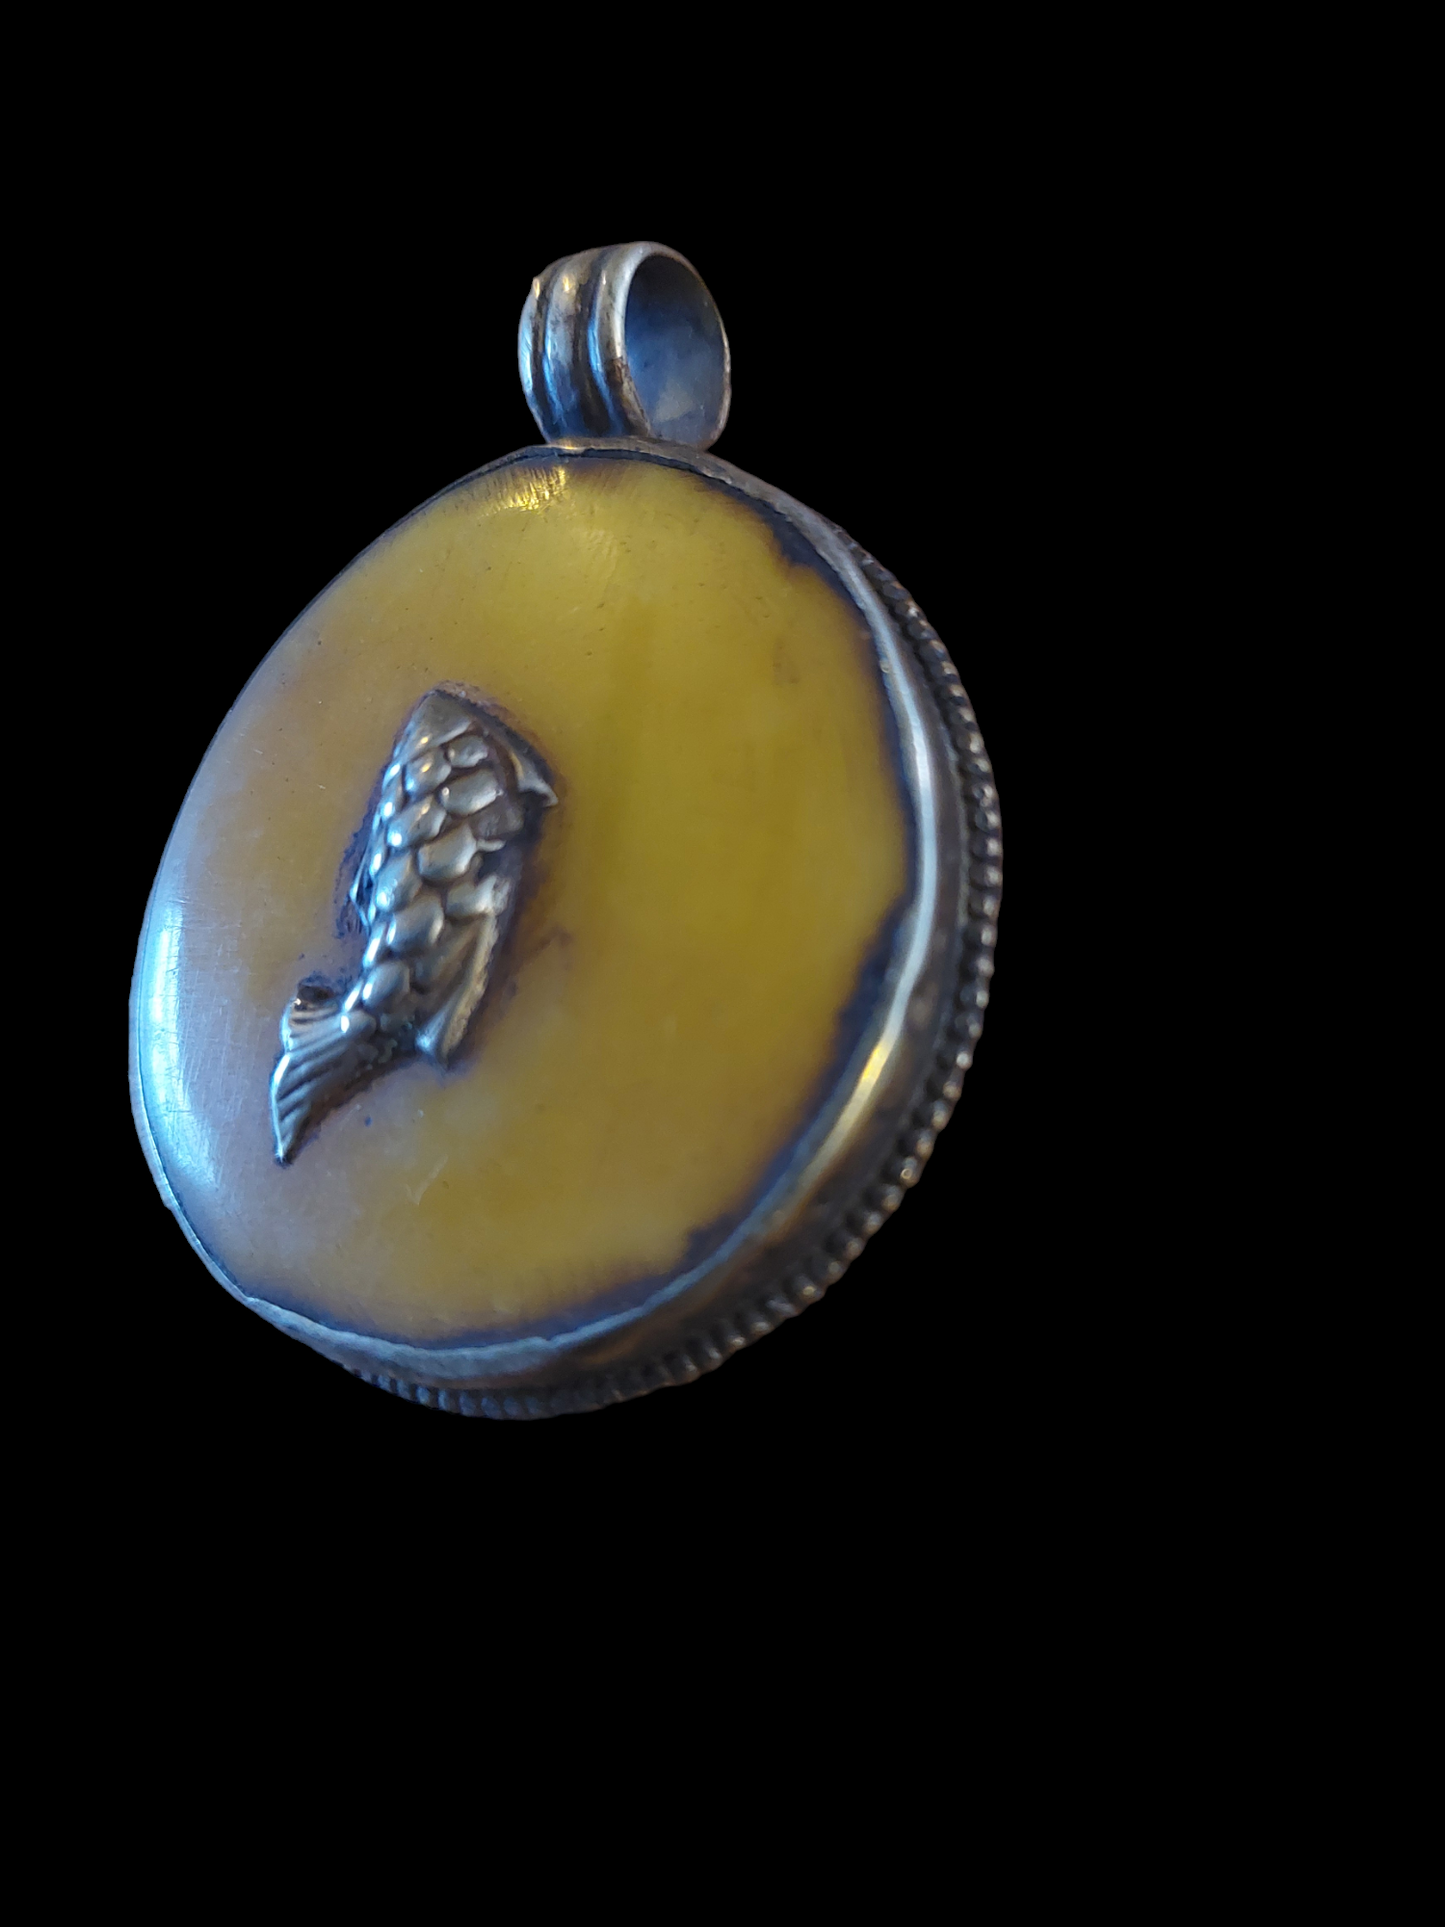 Vintage Tibetan silver and beeswax amber pendant